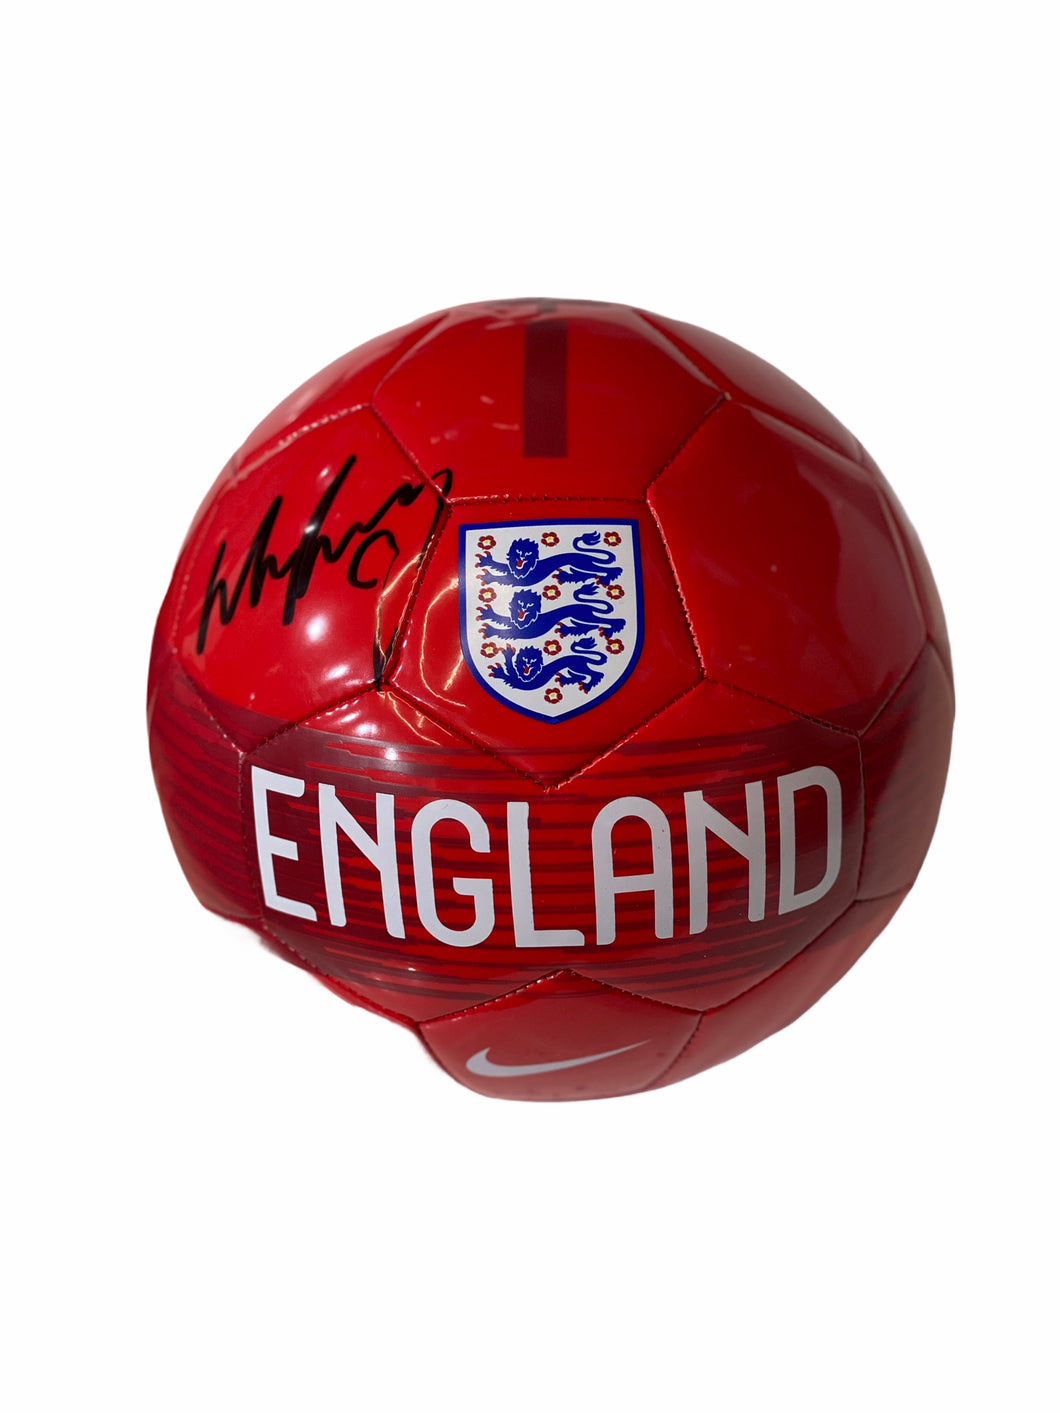 Balón | Inglaterra | Wayne Rooney